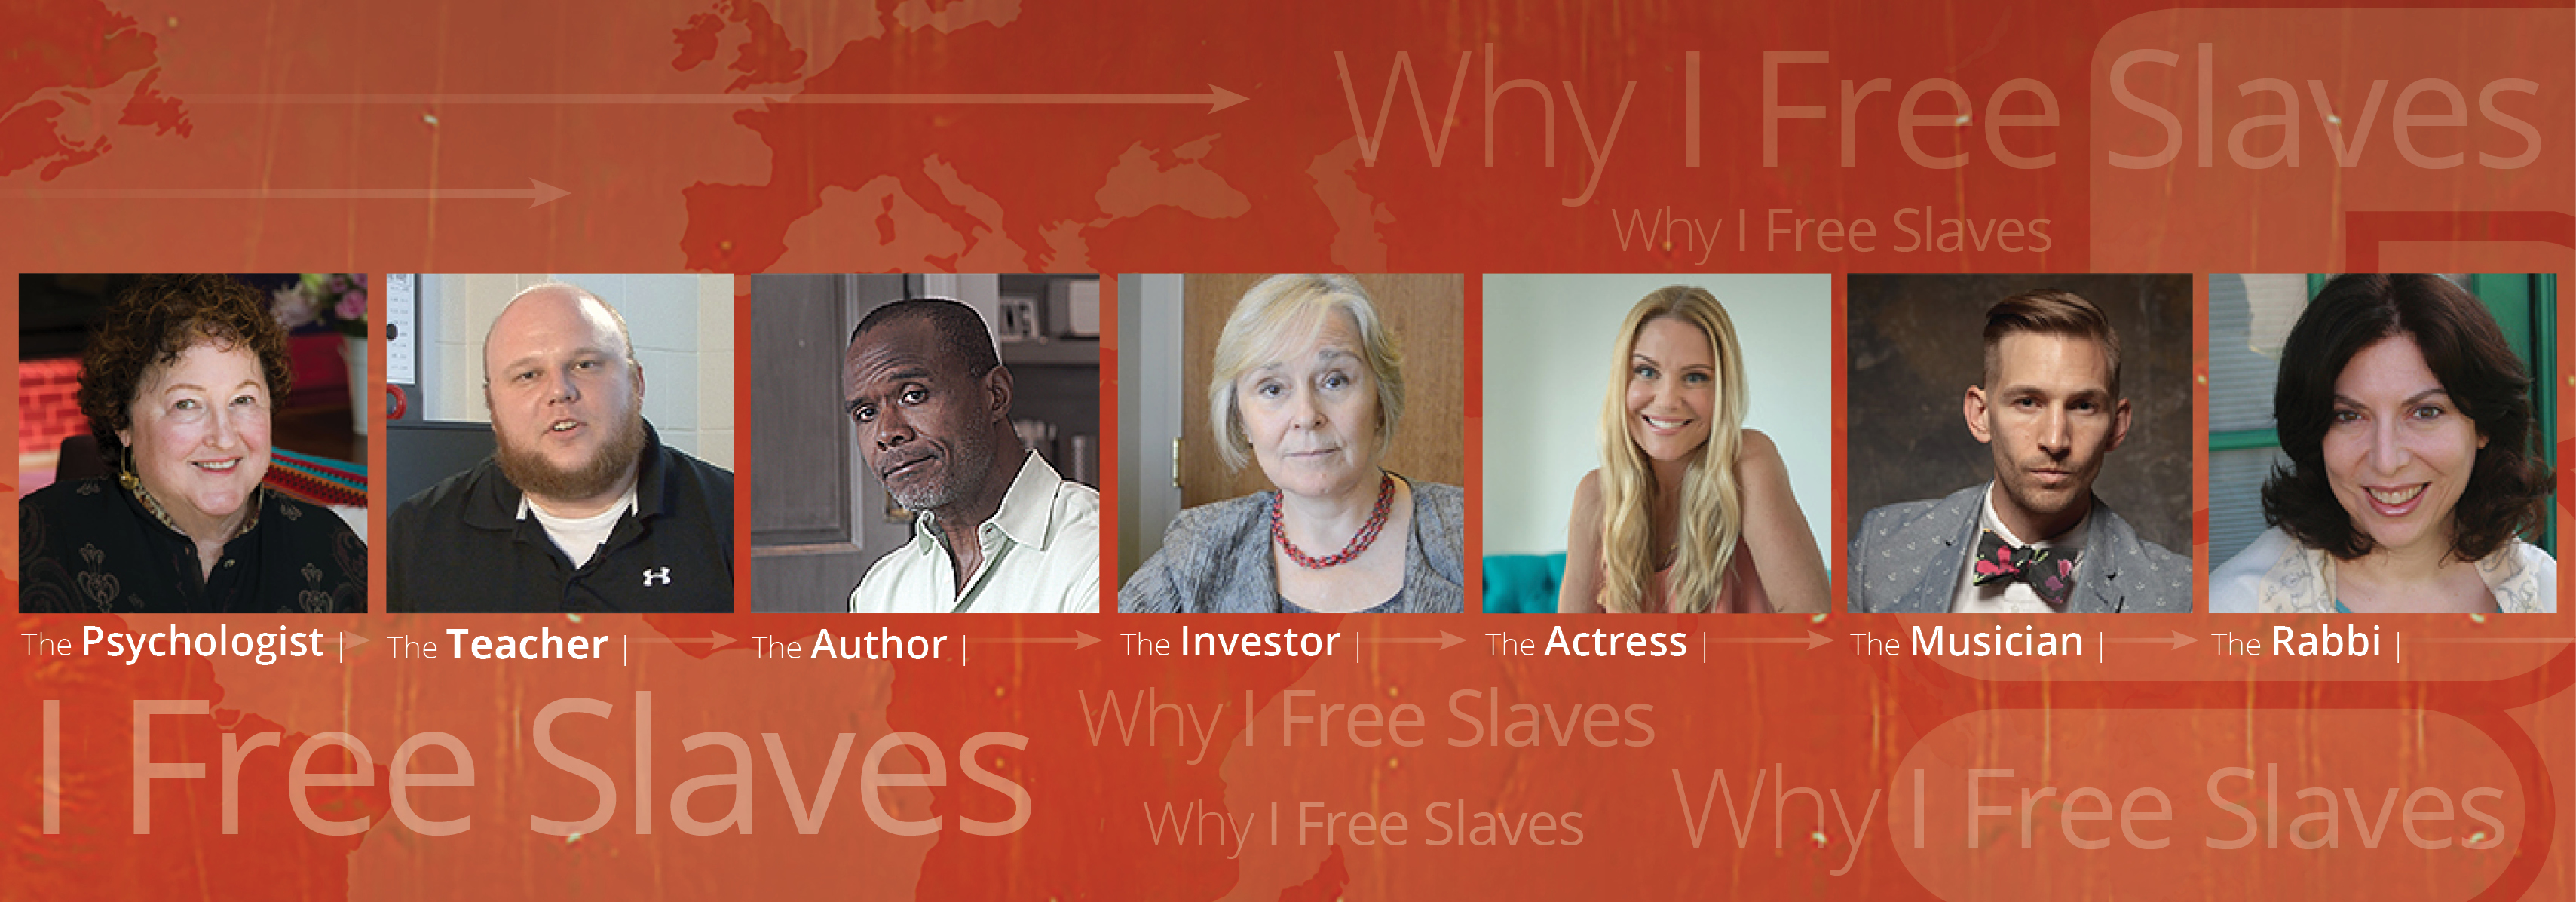 Why I Free Slaves: Actress Virginia Williams